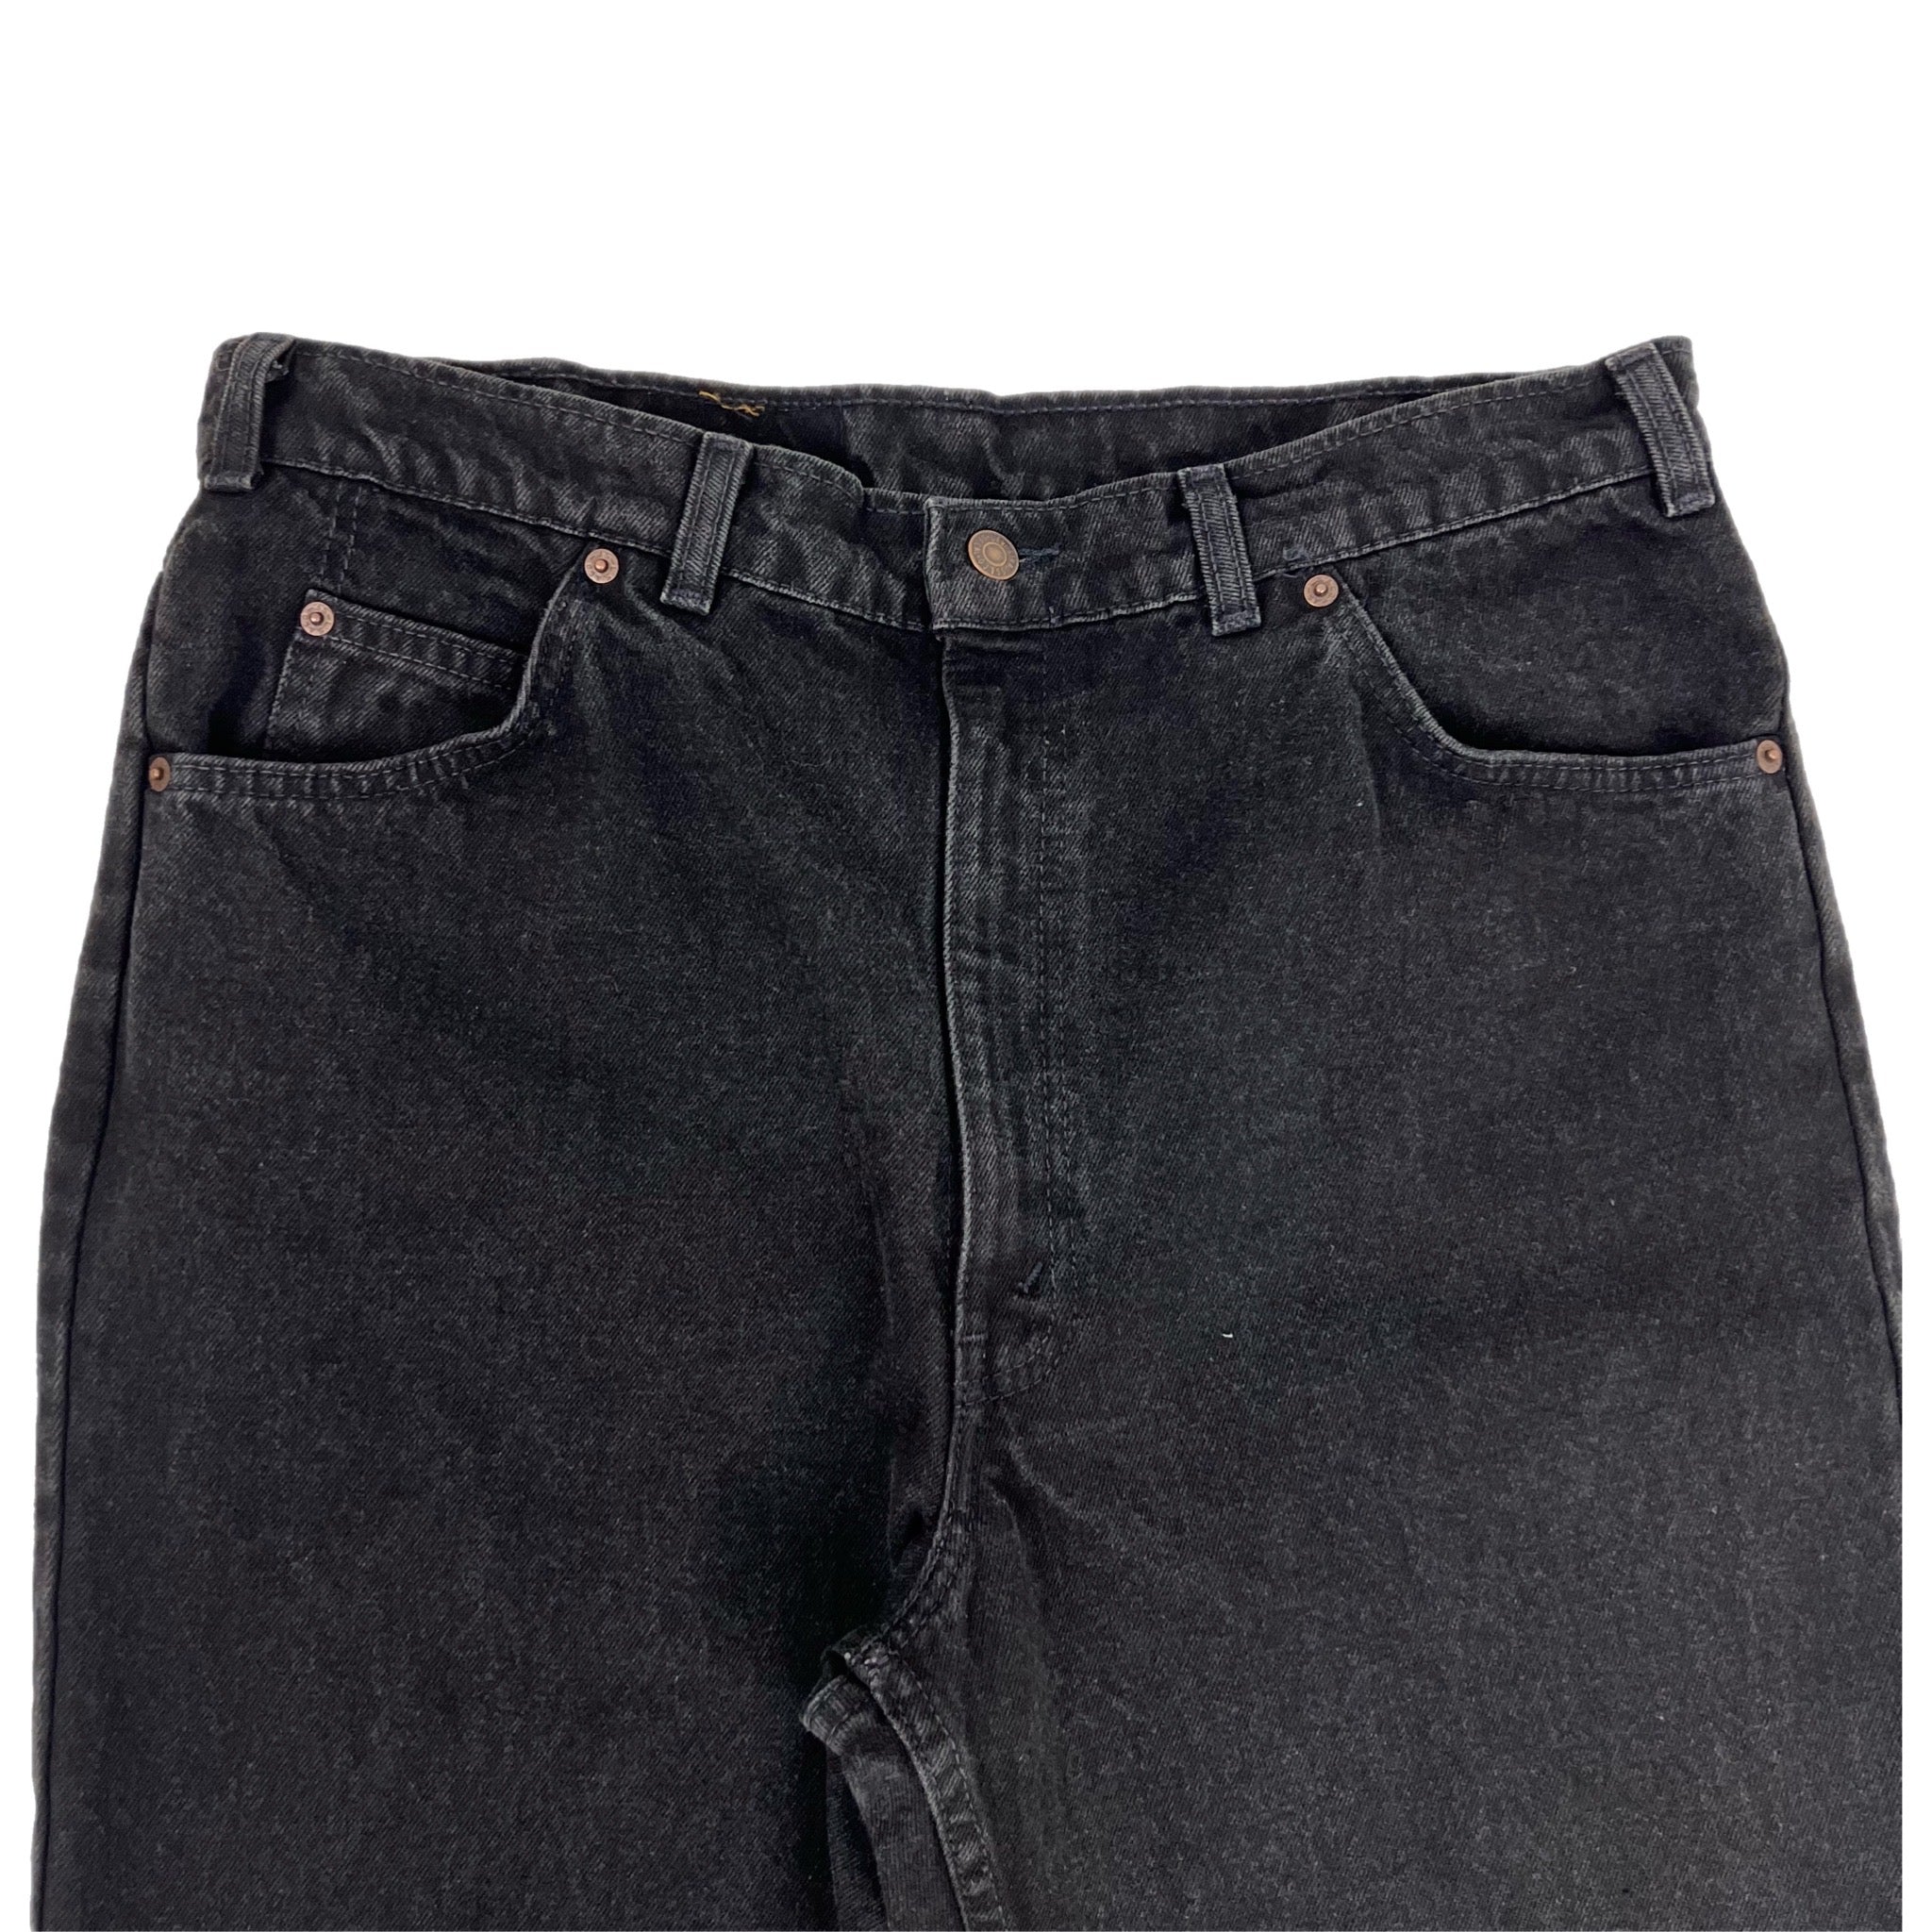 Vintage Levi Orange Tab Black Denim - Dark Black Jeans